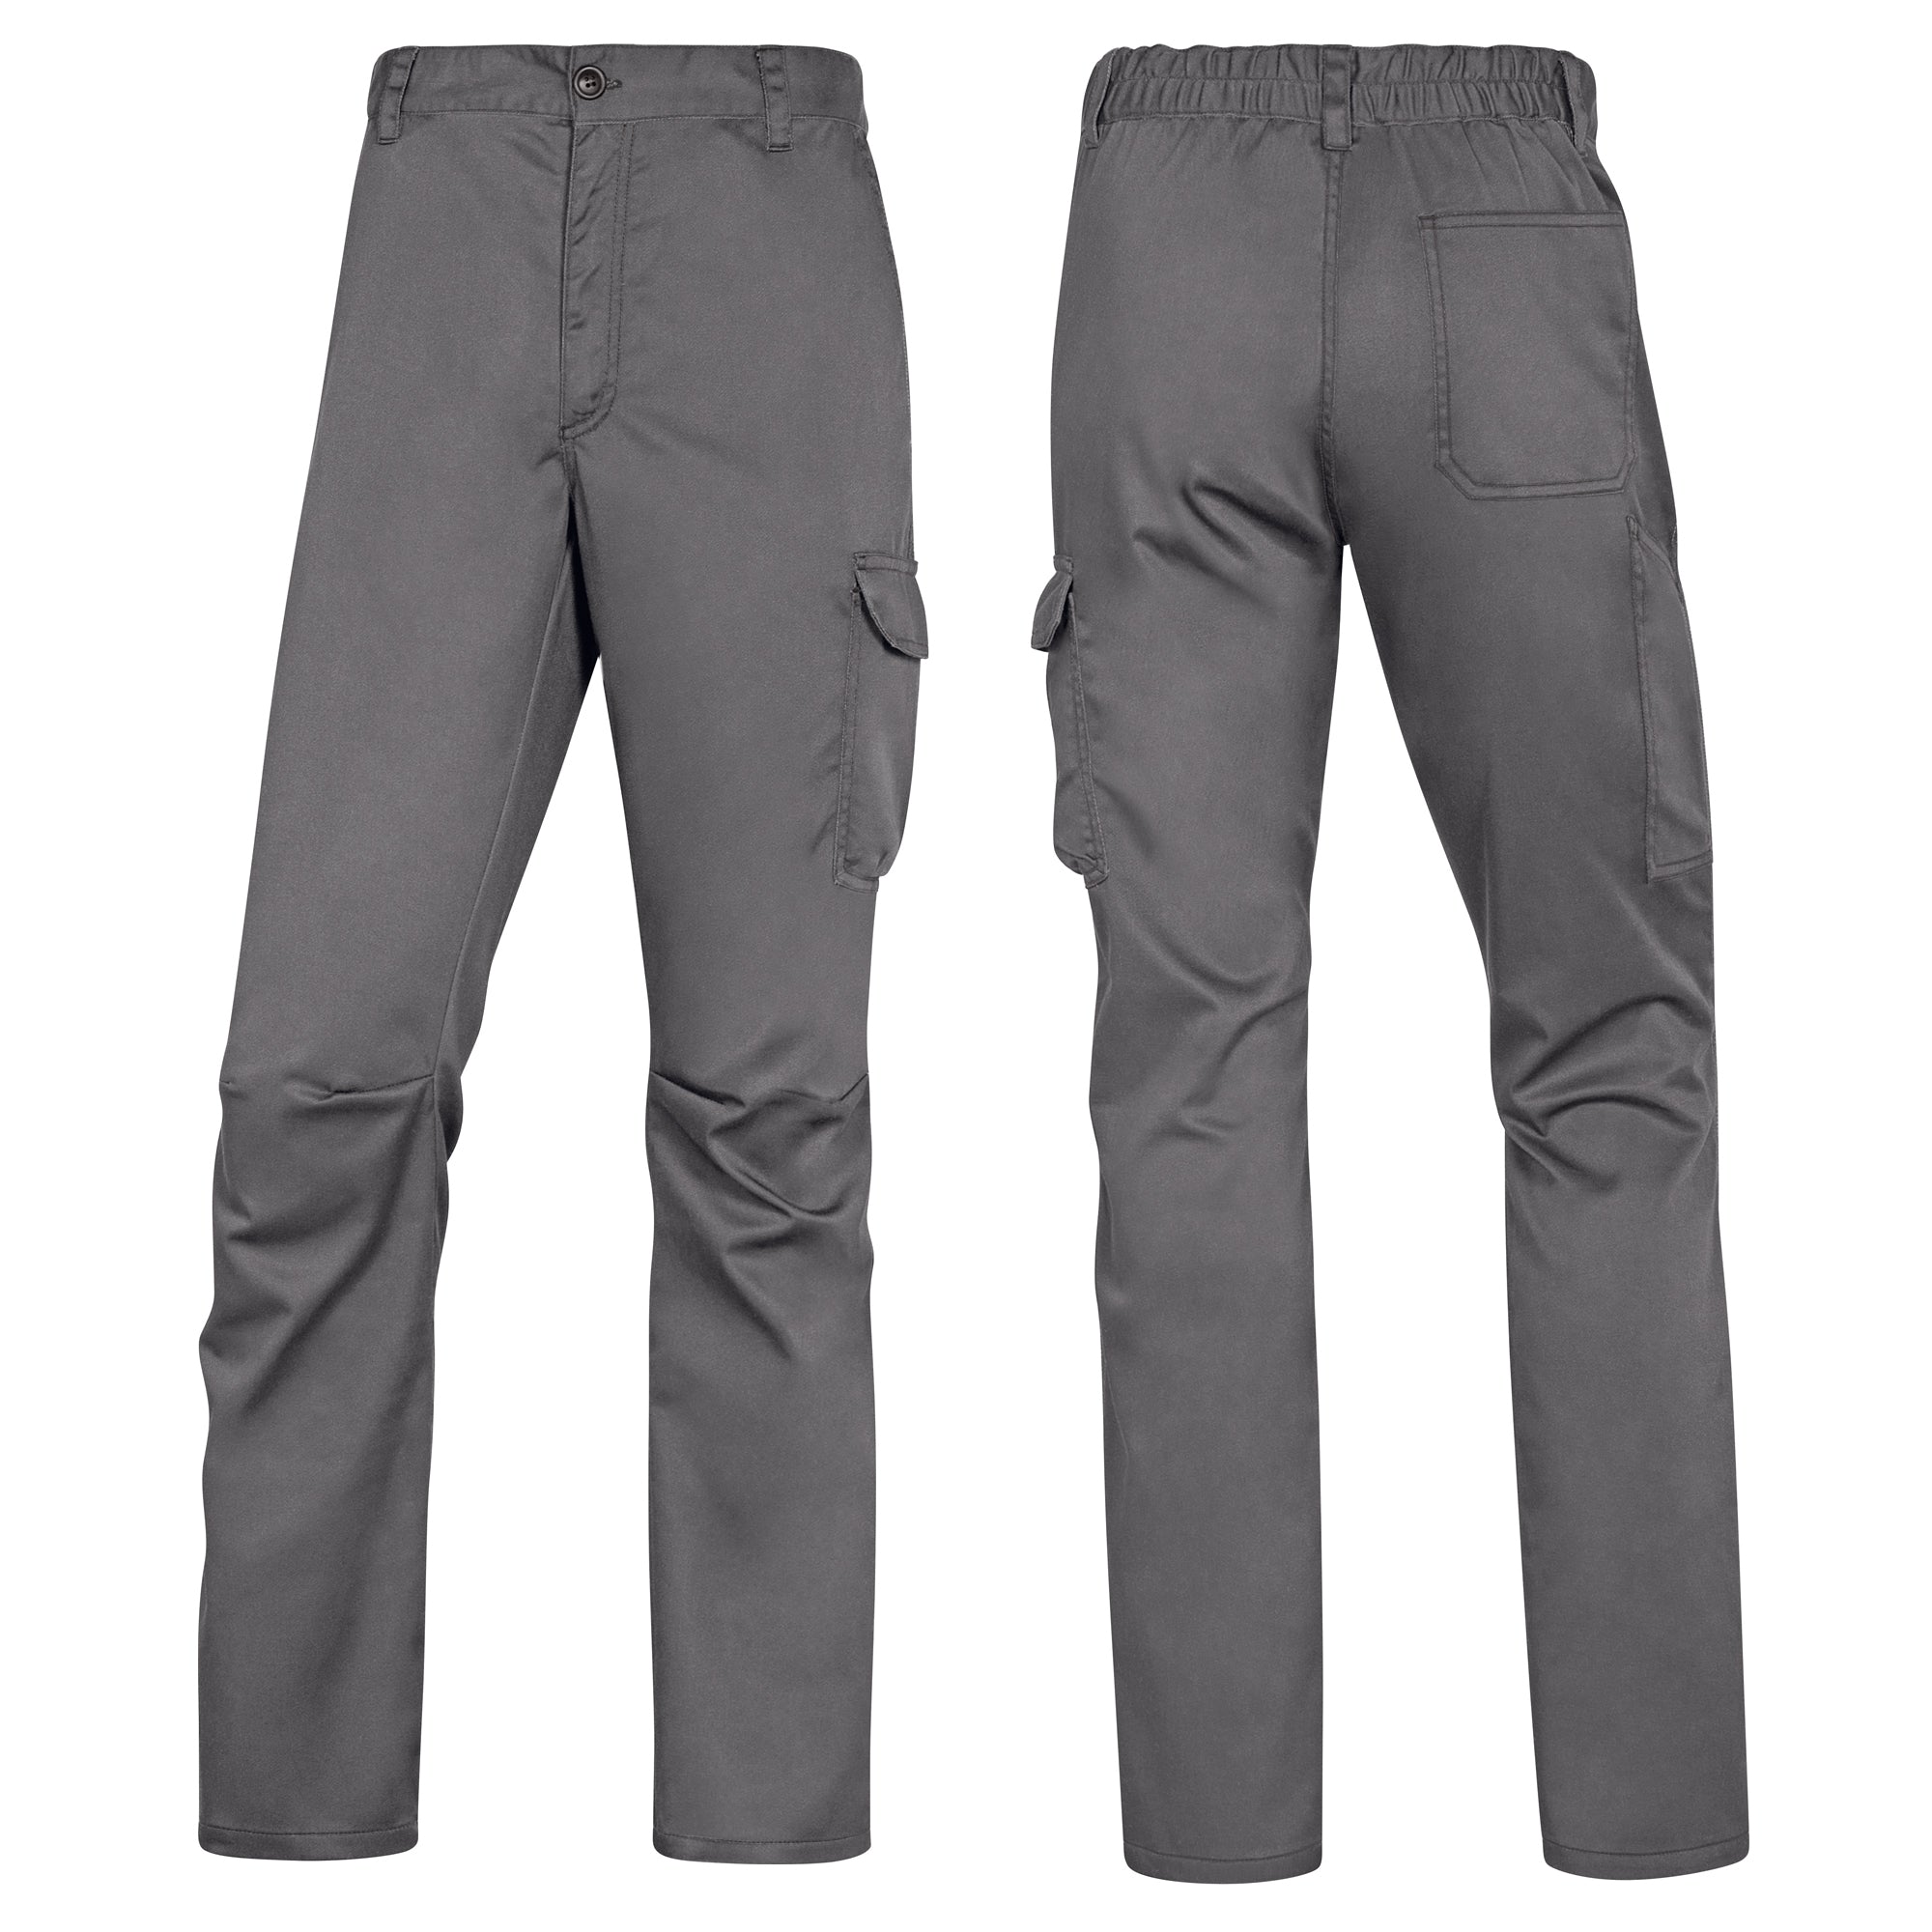 deltaplus-pantalone-lavoro-panostrpa-tg-m-grigio-nero